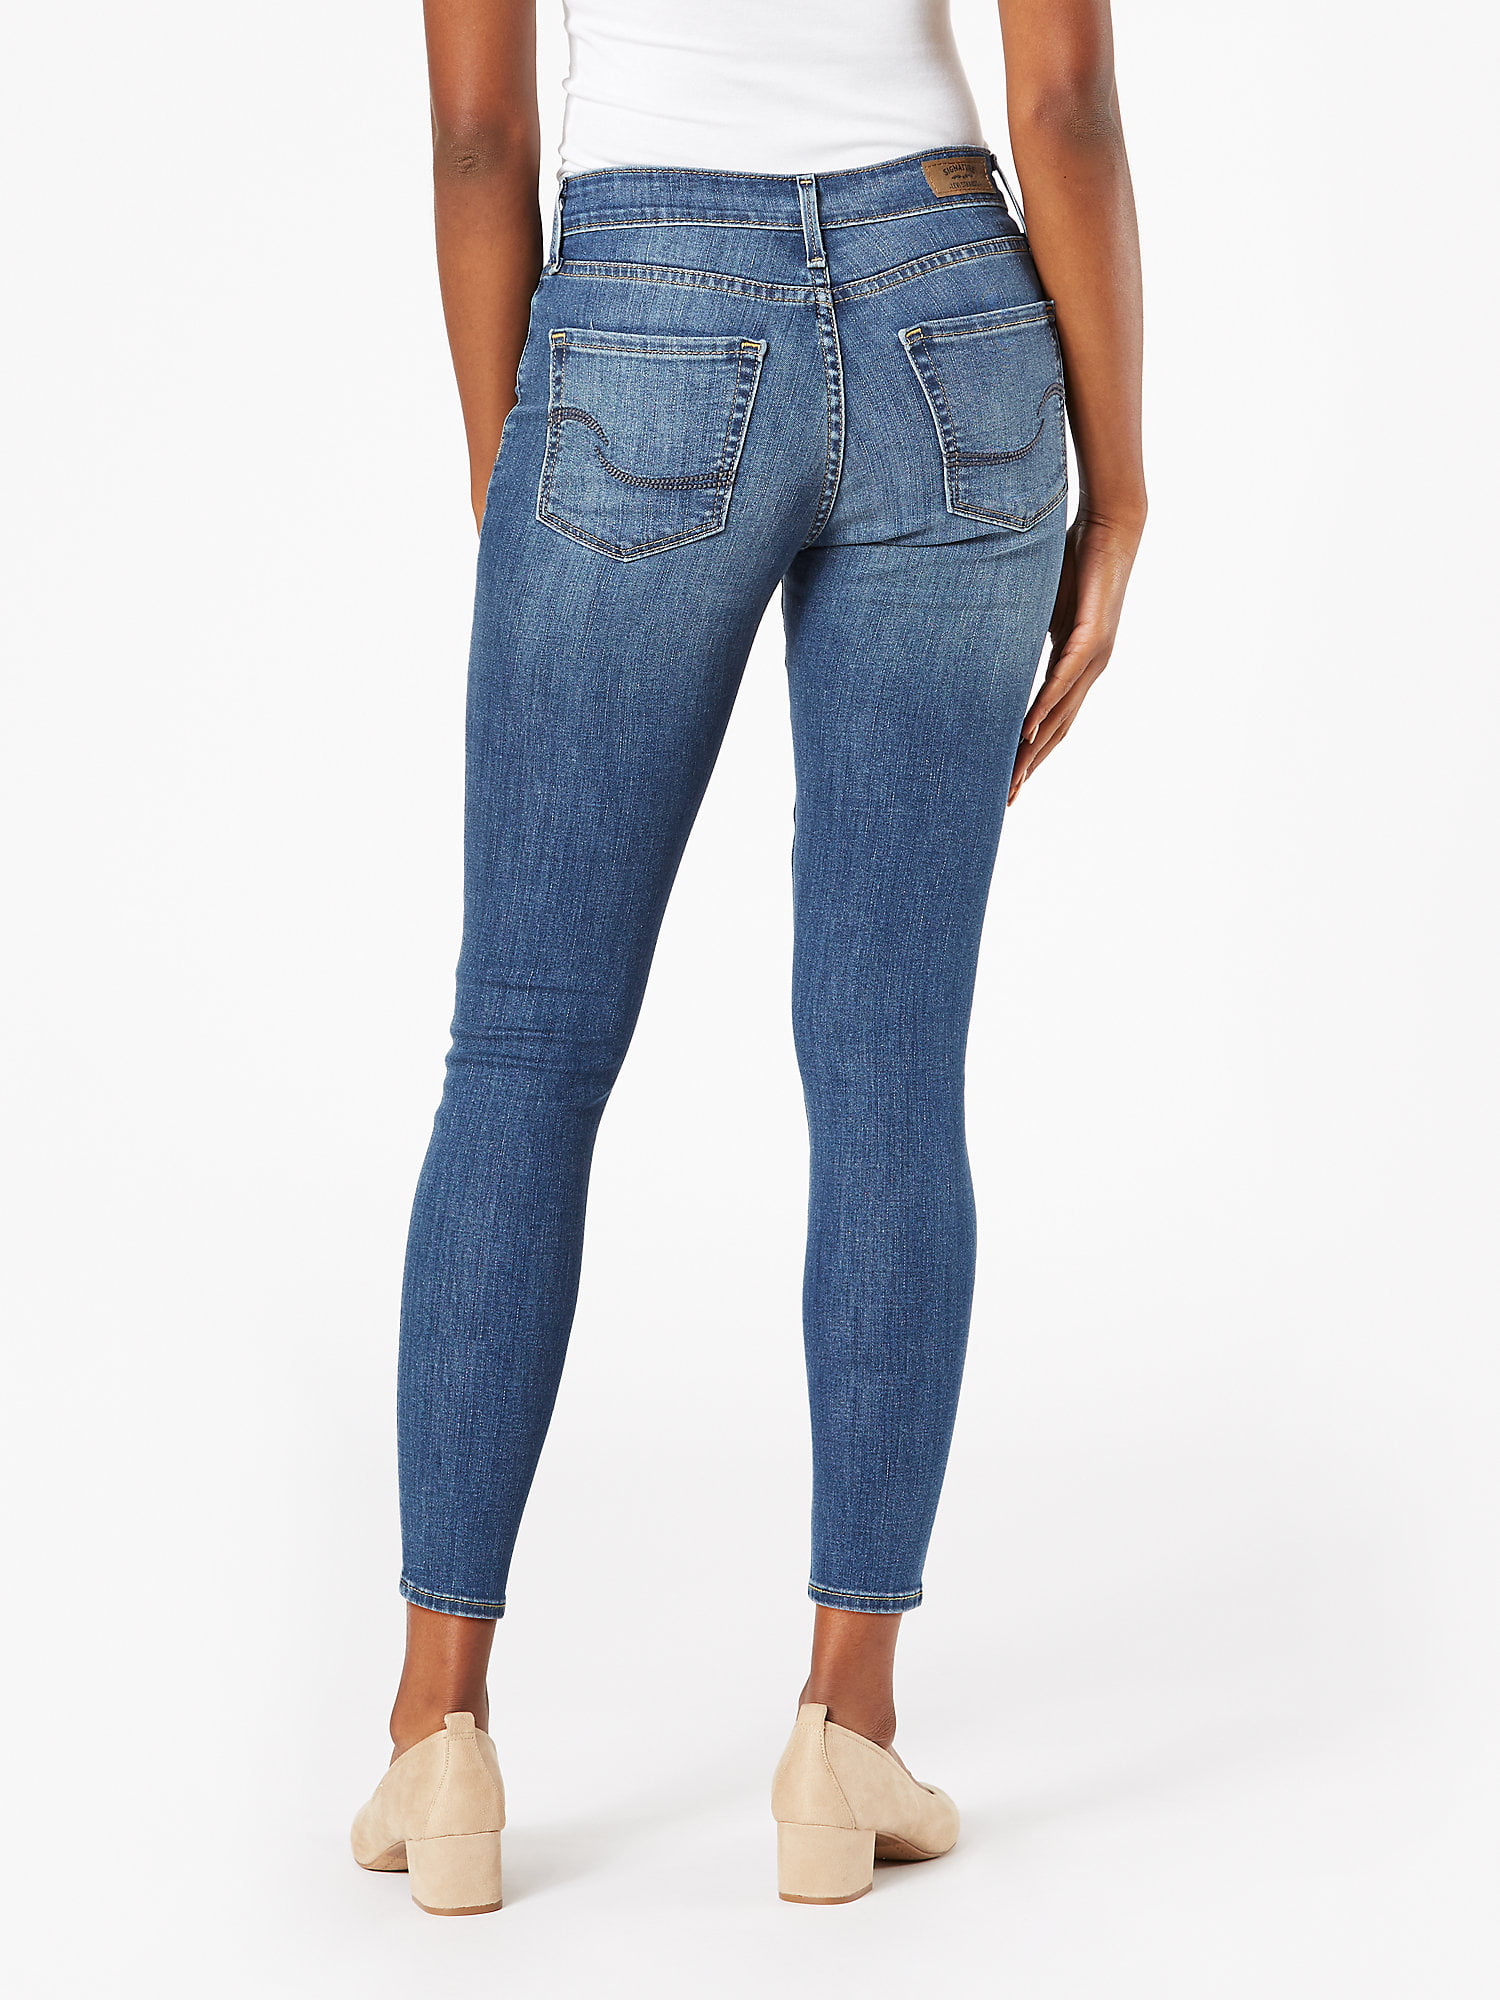 levis skinny crop jeans